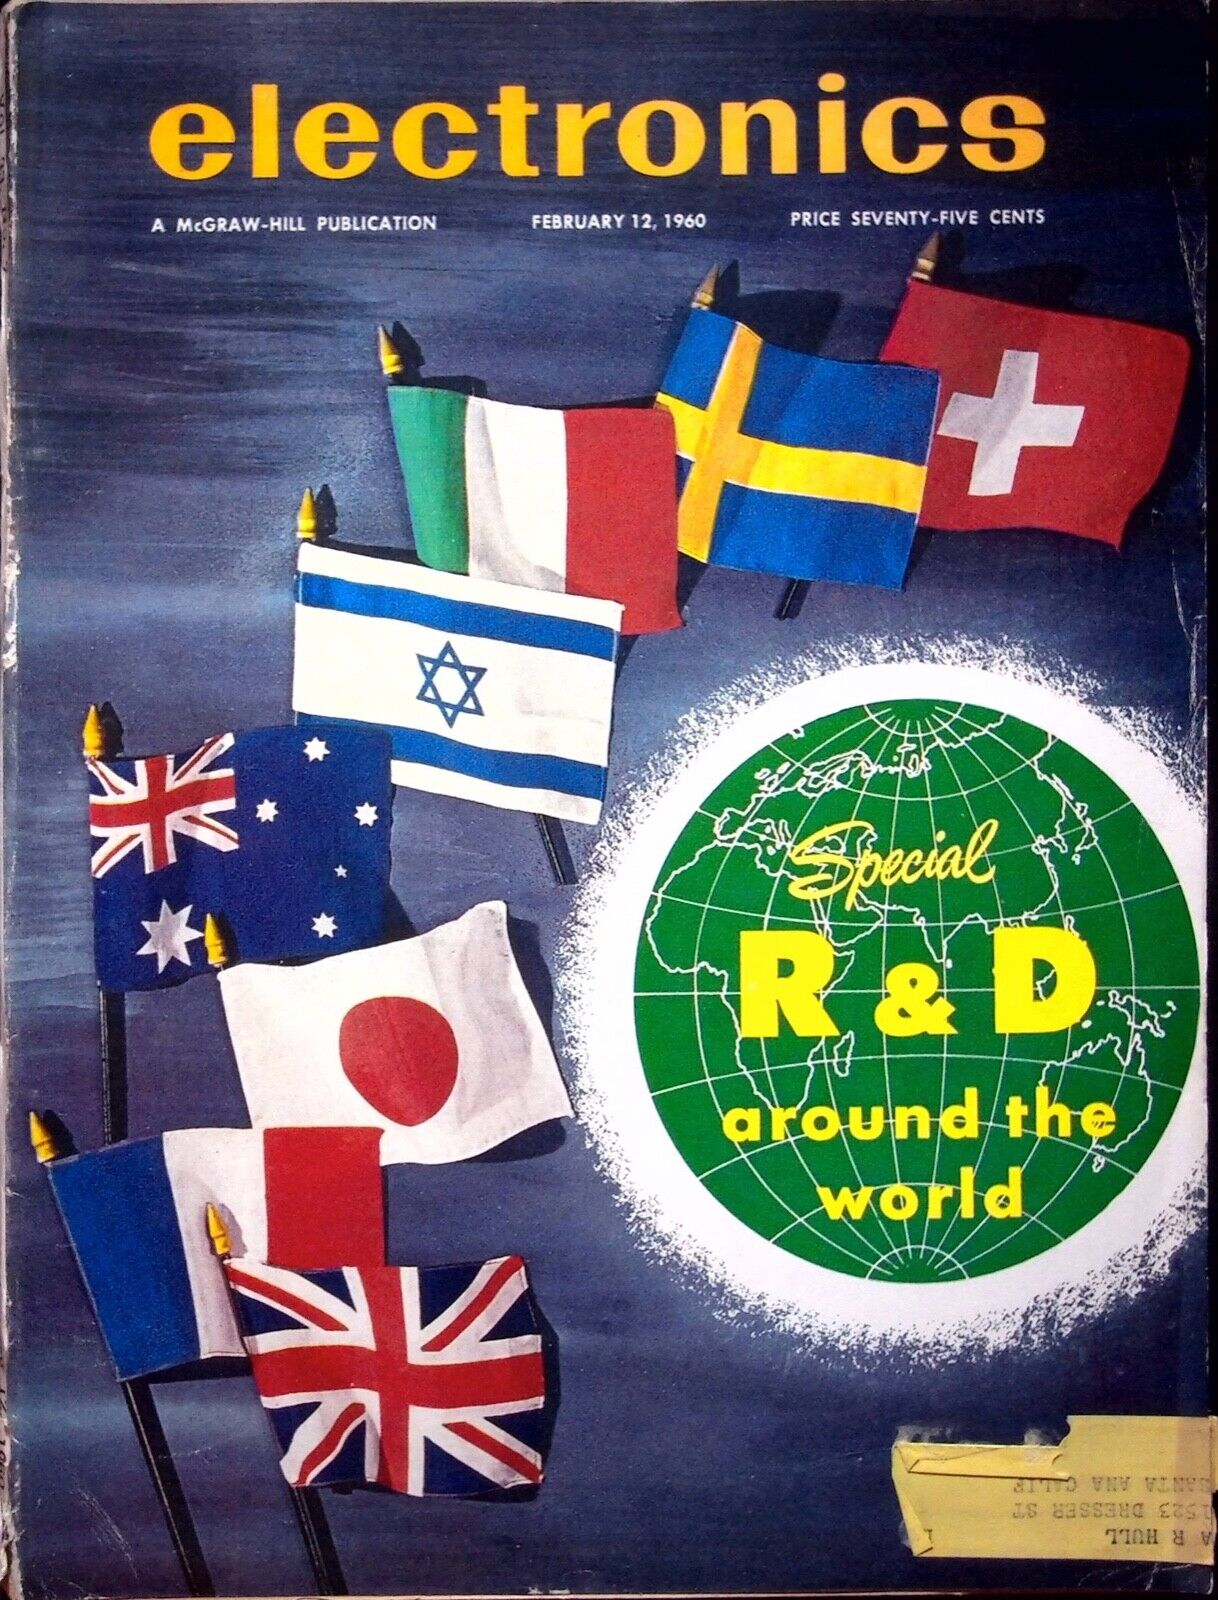 RESEARCH & DEVELOPMENT AROUND THE WORLD - ELECTRONICS MAGAZINE, FEBRUARY 12,1960